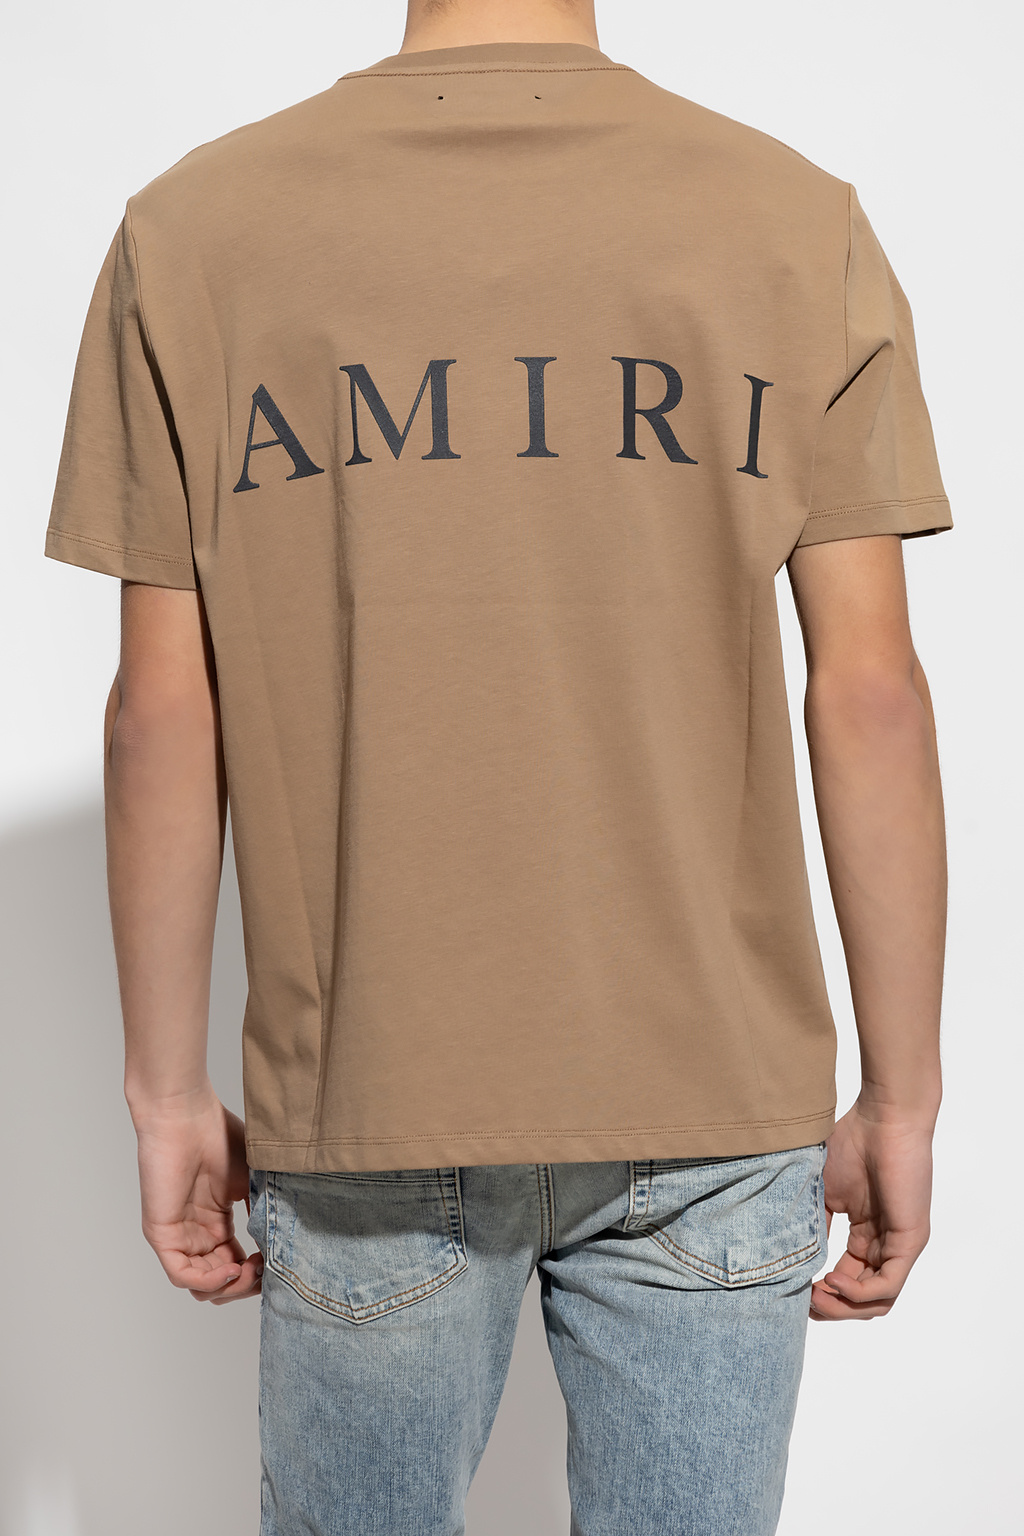 Amiri Monogrammed T-shirt